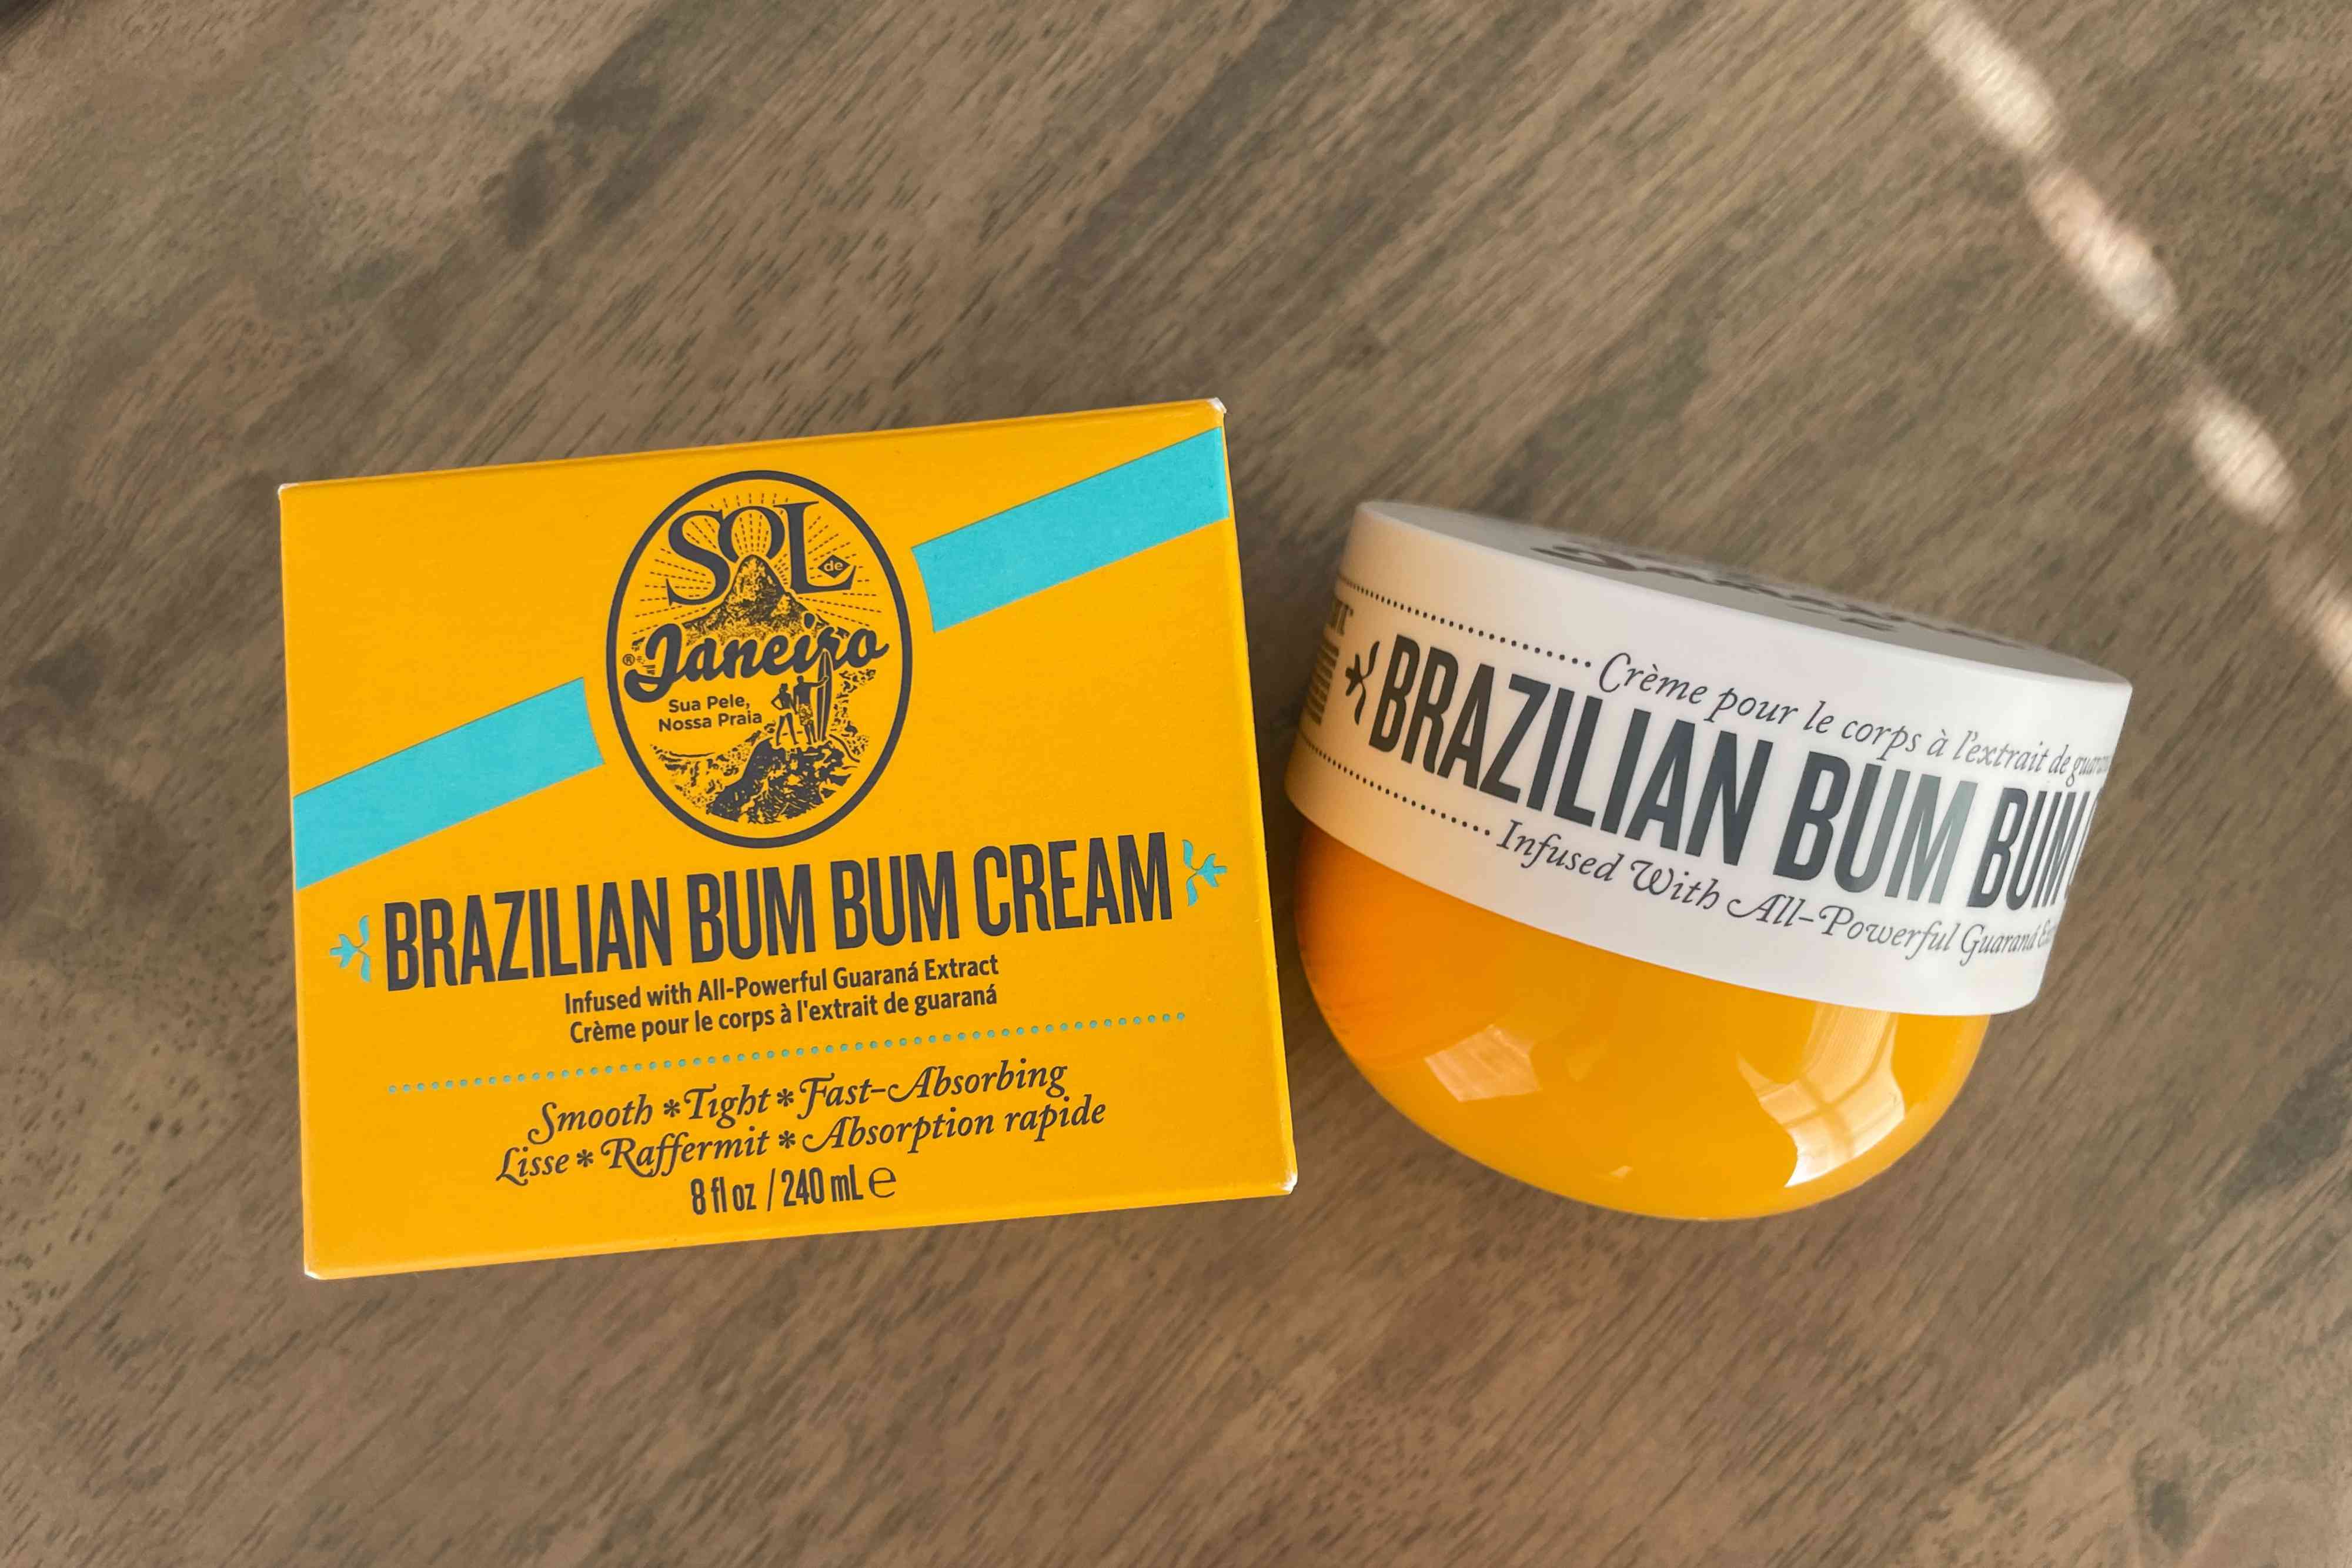 A jar of Sol de Janeiro Brazilian Bum Bum Cream next to its box